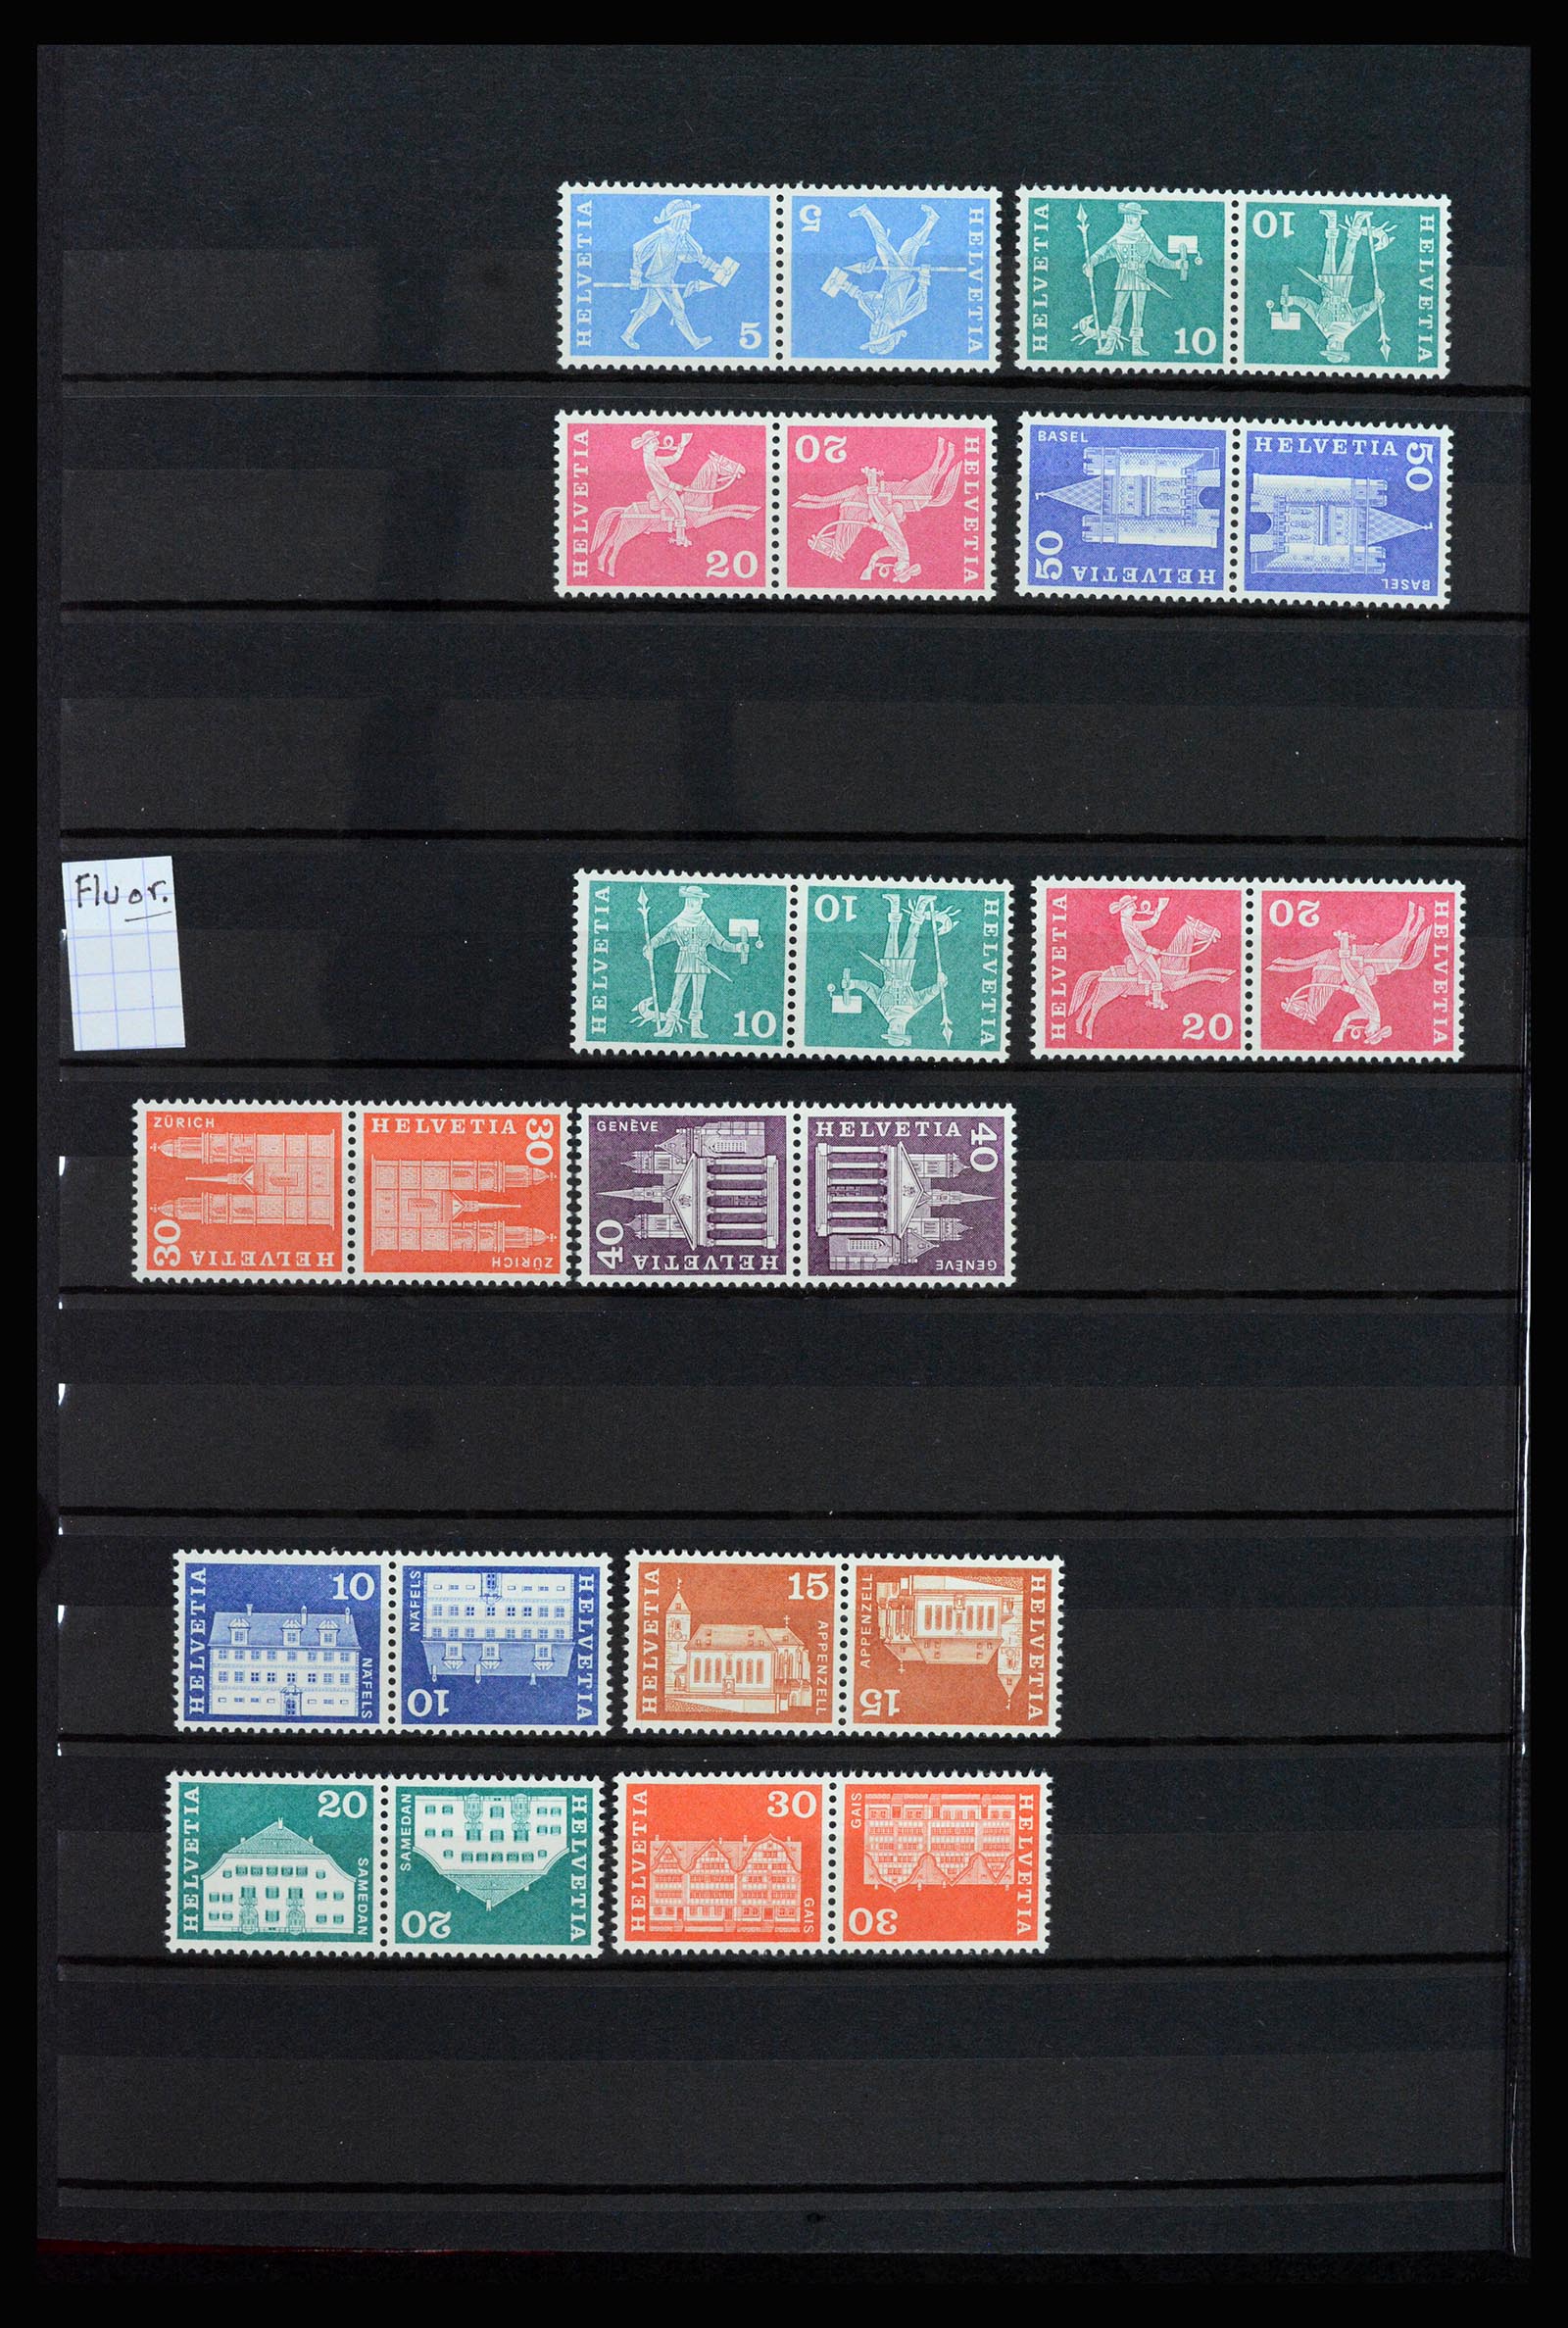 37225 170 - Stamp collection 37225 Switzerland 1854-2020.